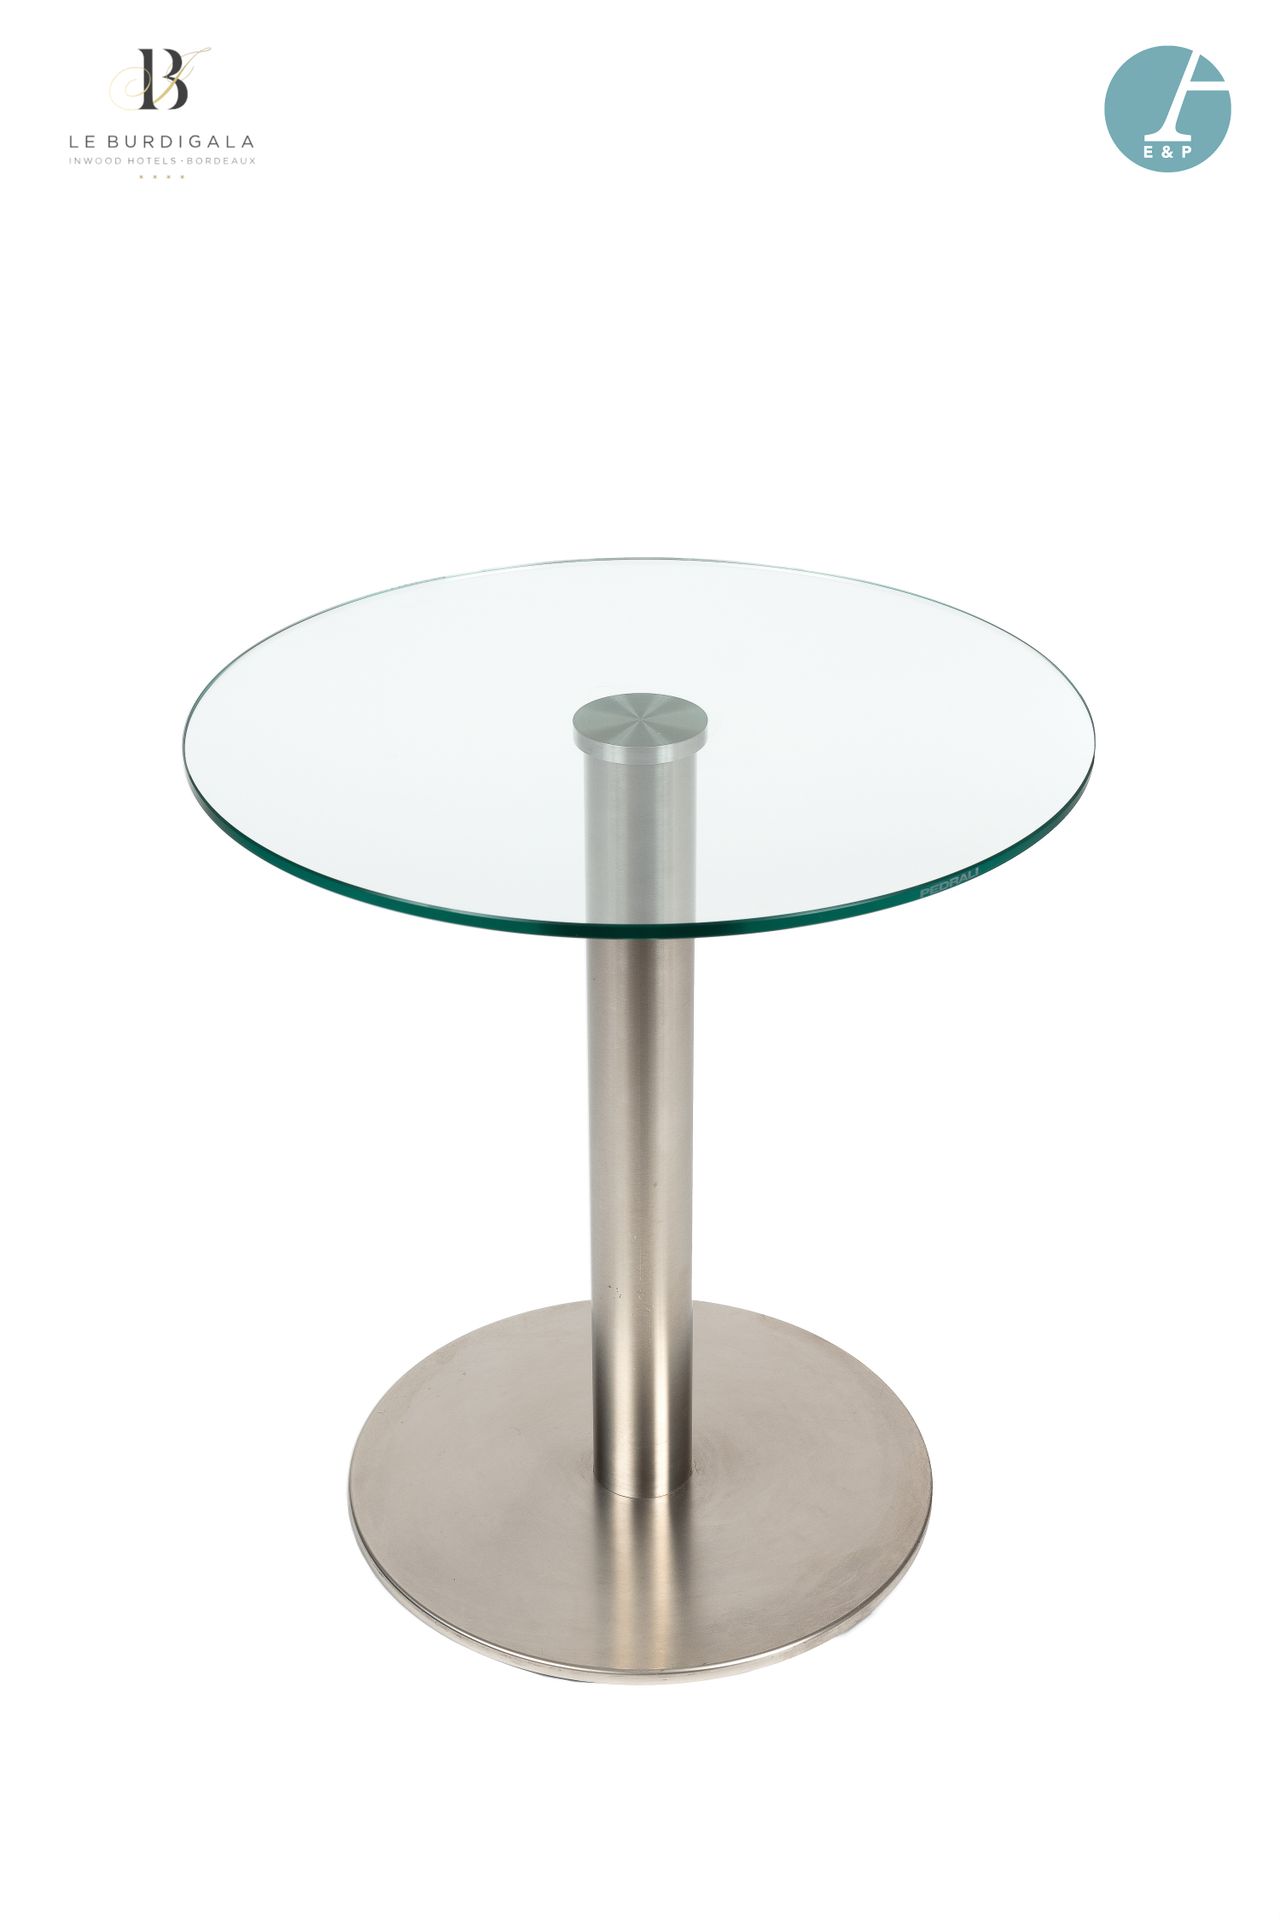 Null 从波尔多的4*酒店Burdigala出发



PEDRALI, 一套两个基座的桌子，玻璃桌面和金属底座，高: 65厘米 - 直径: 60厘米 条件